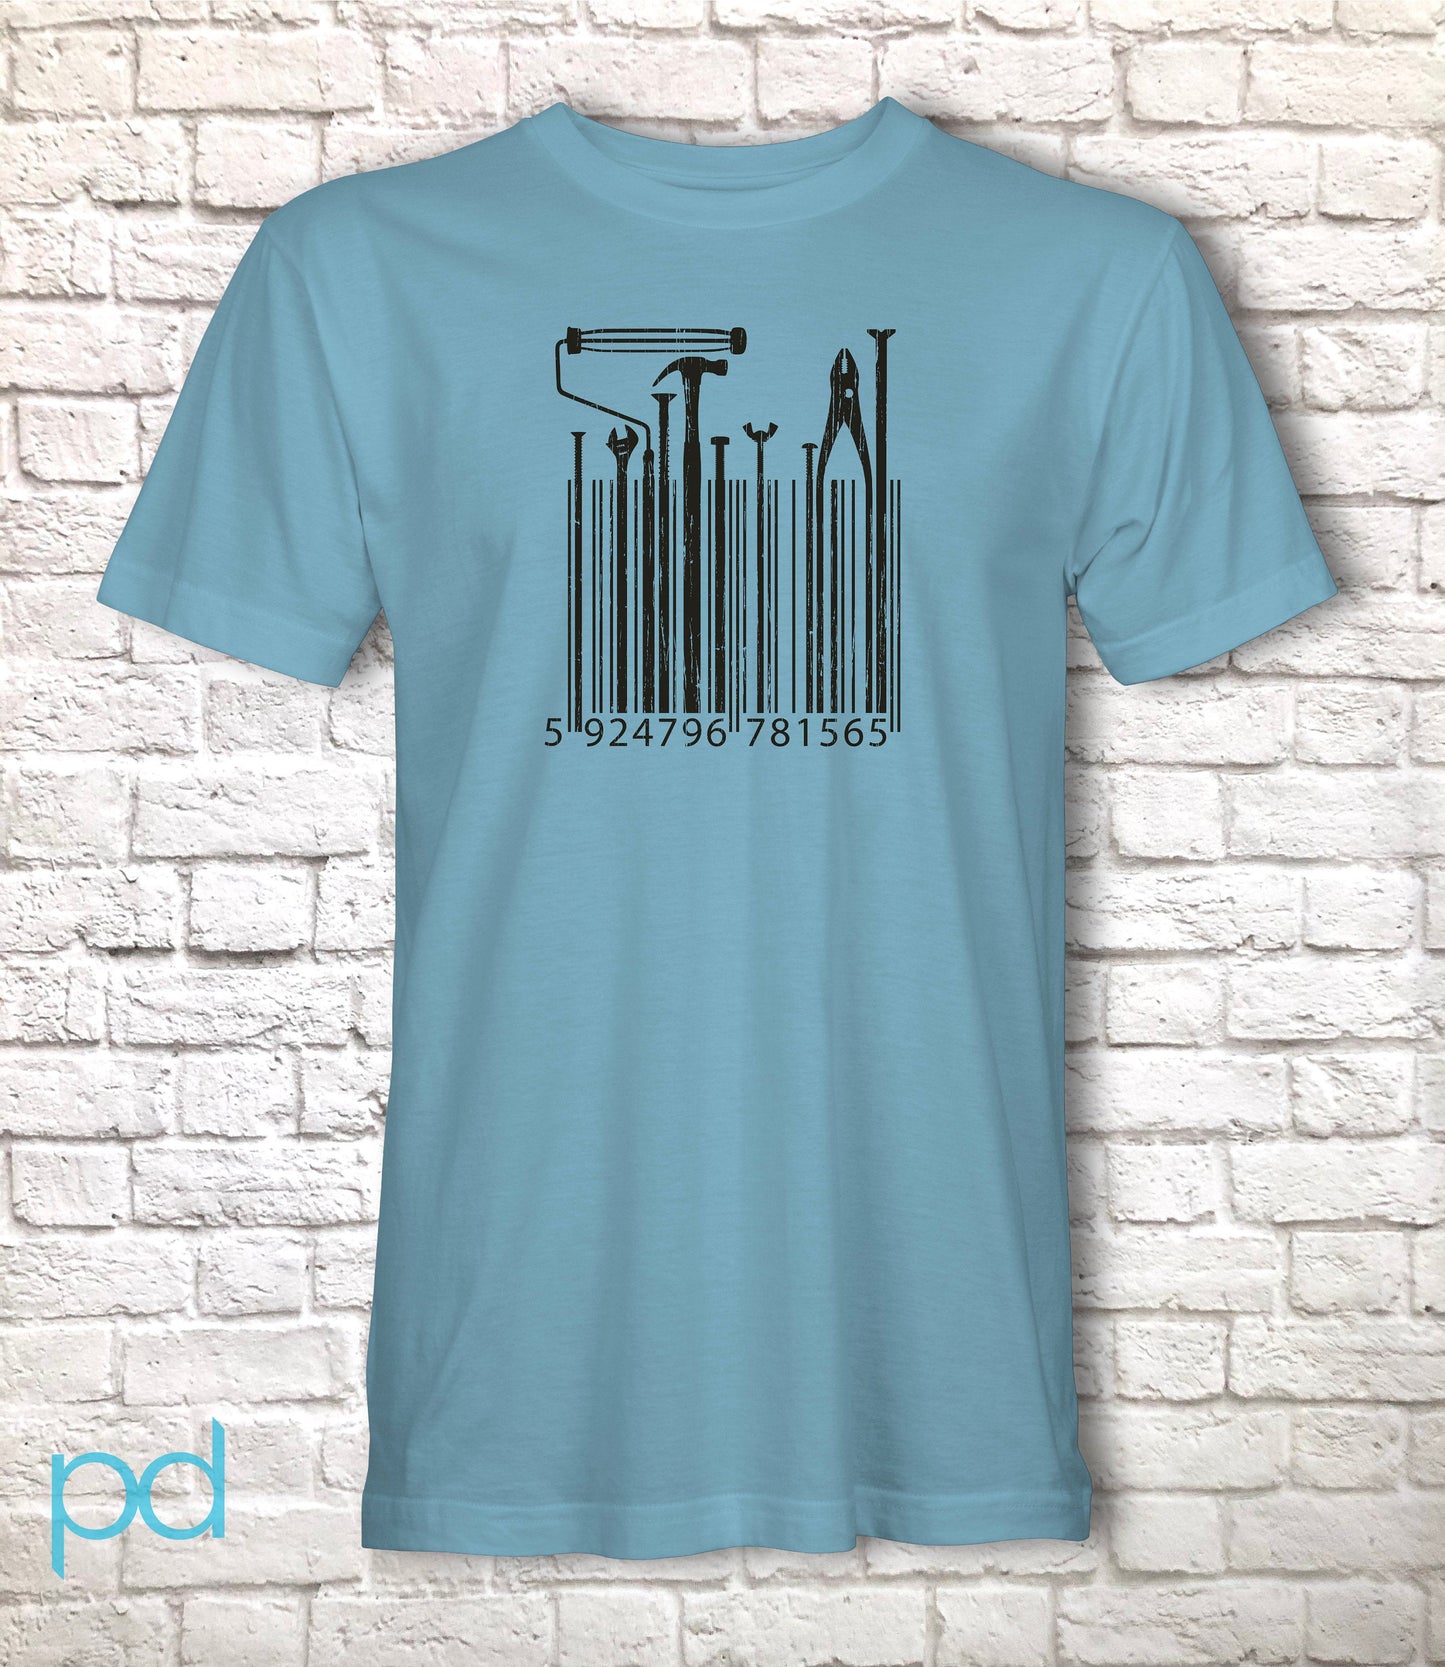 DIY T Shirt, Painter & Decorator Tools Gift T-Shirt Barcode Style, Tradesman Tradeswoman Unisex Tee Shirt Top For Men or Women